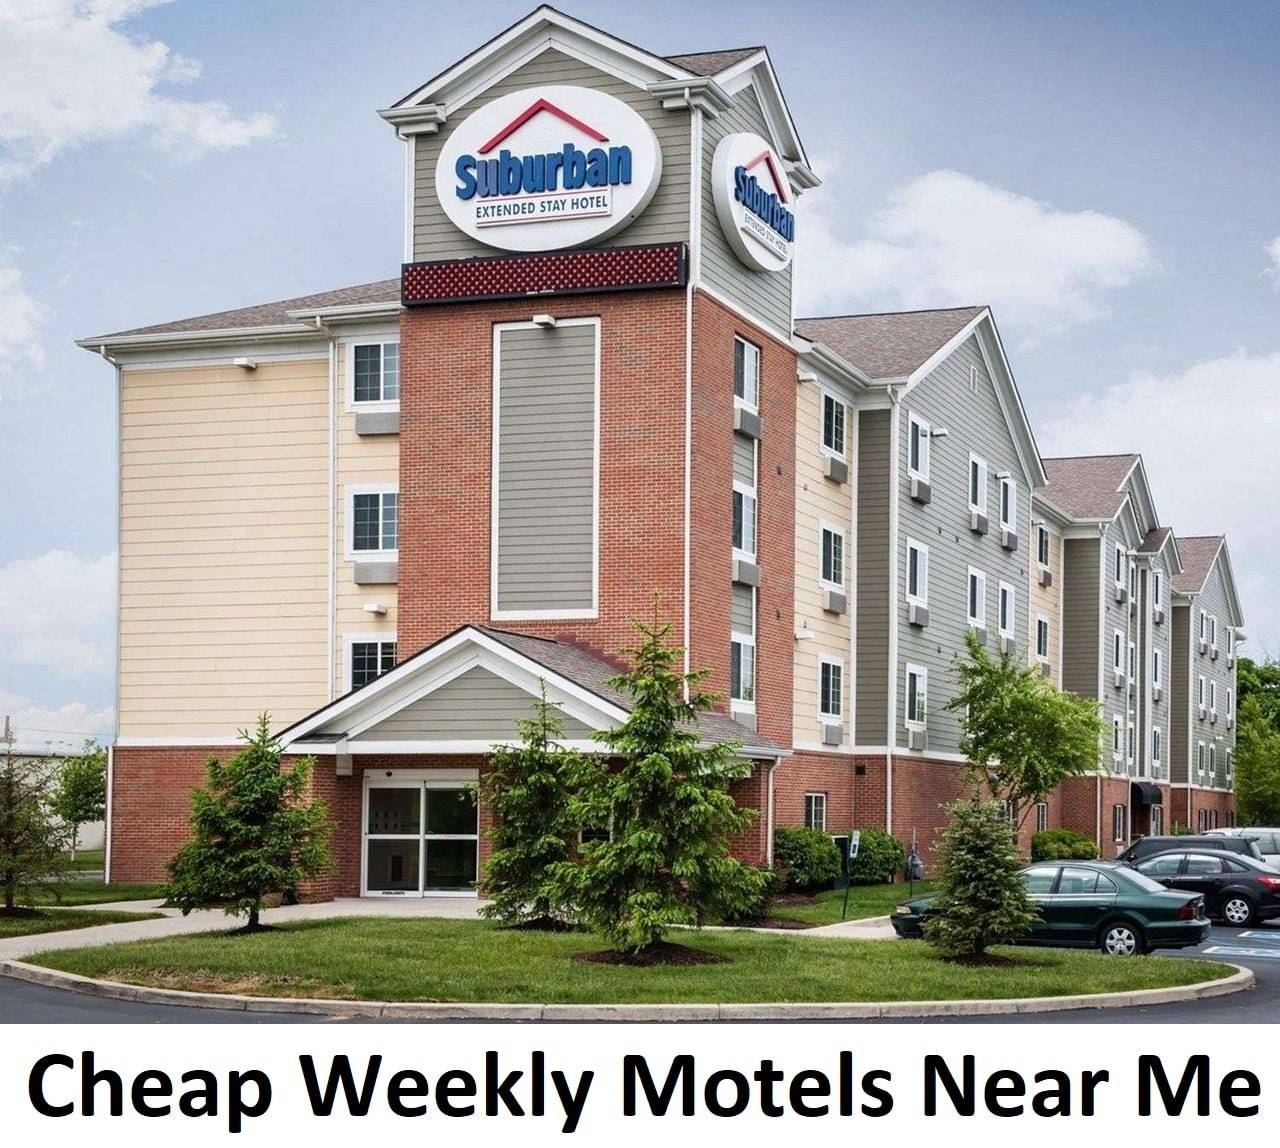 Cheap weekly motels near me